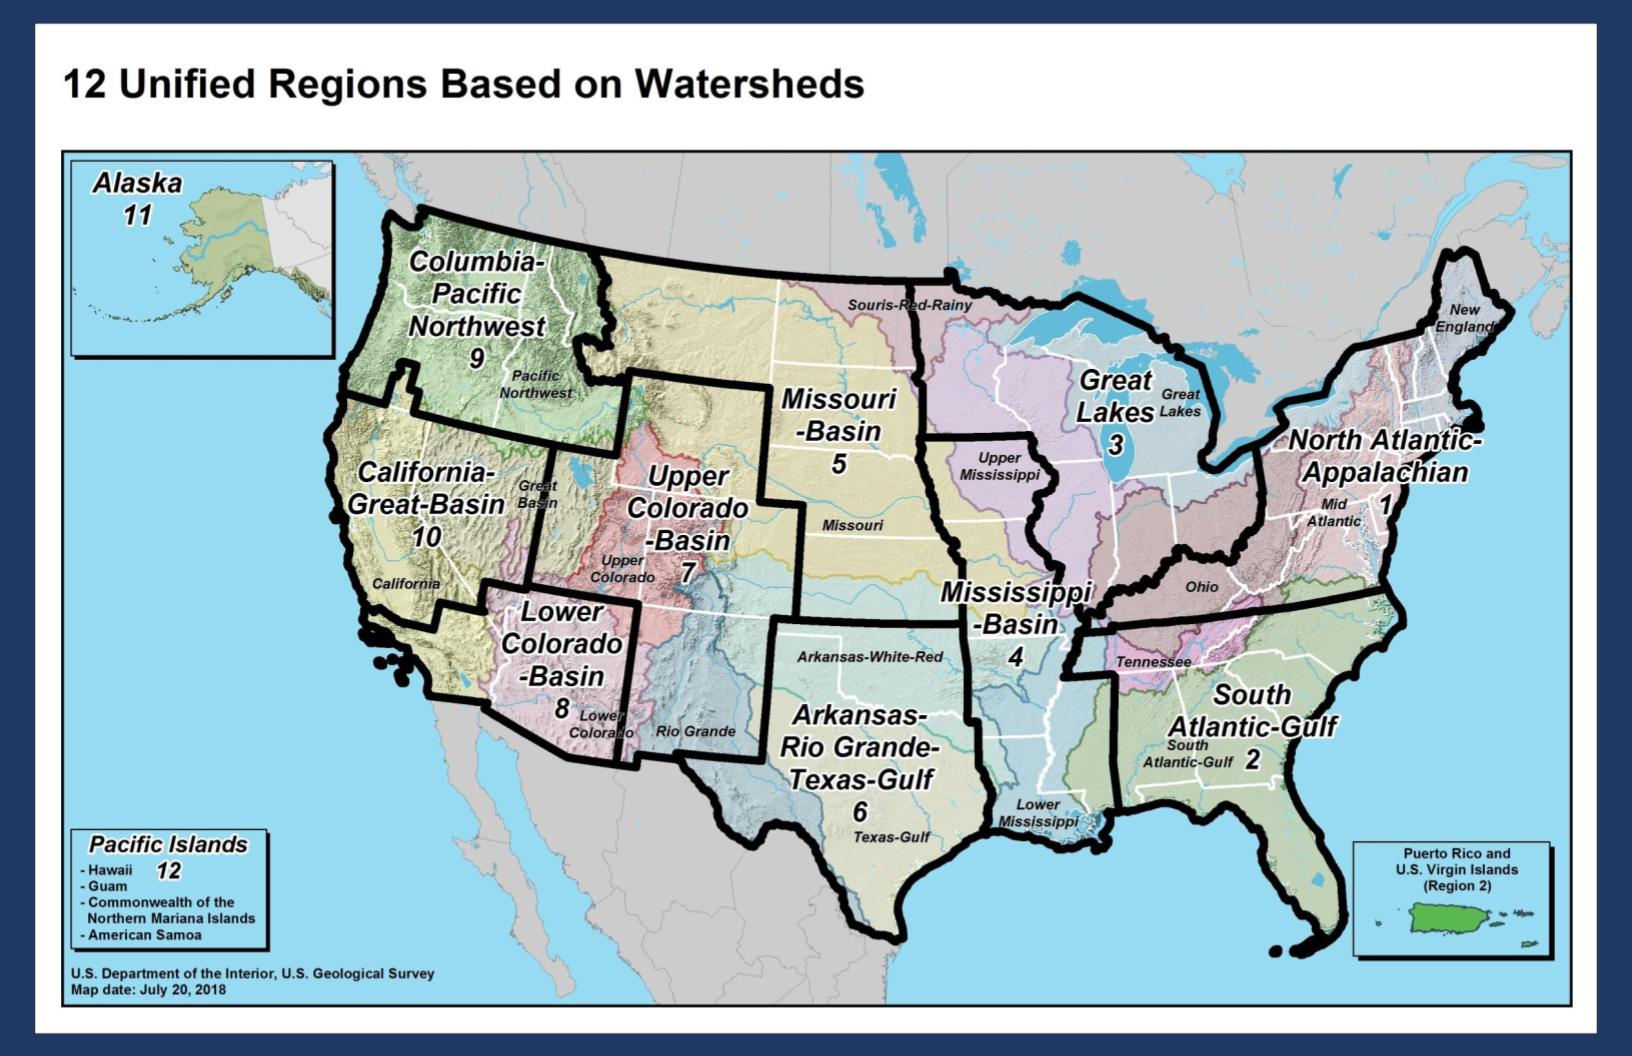 12 unified regions - map